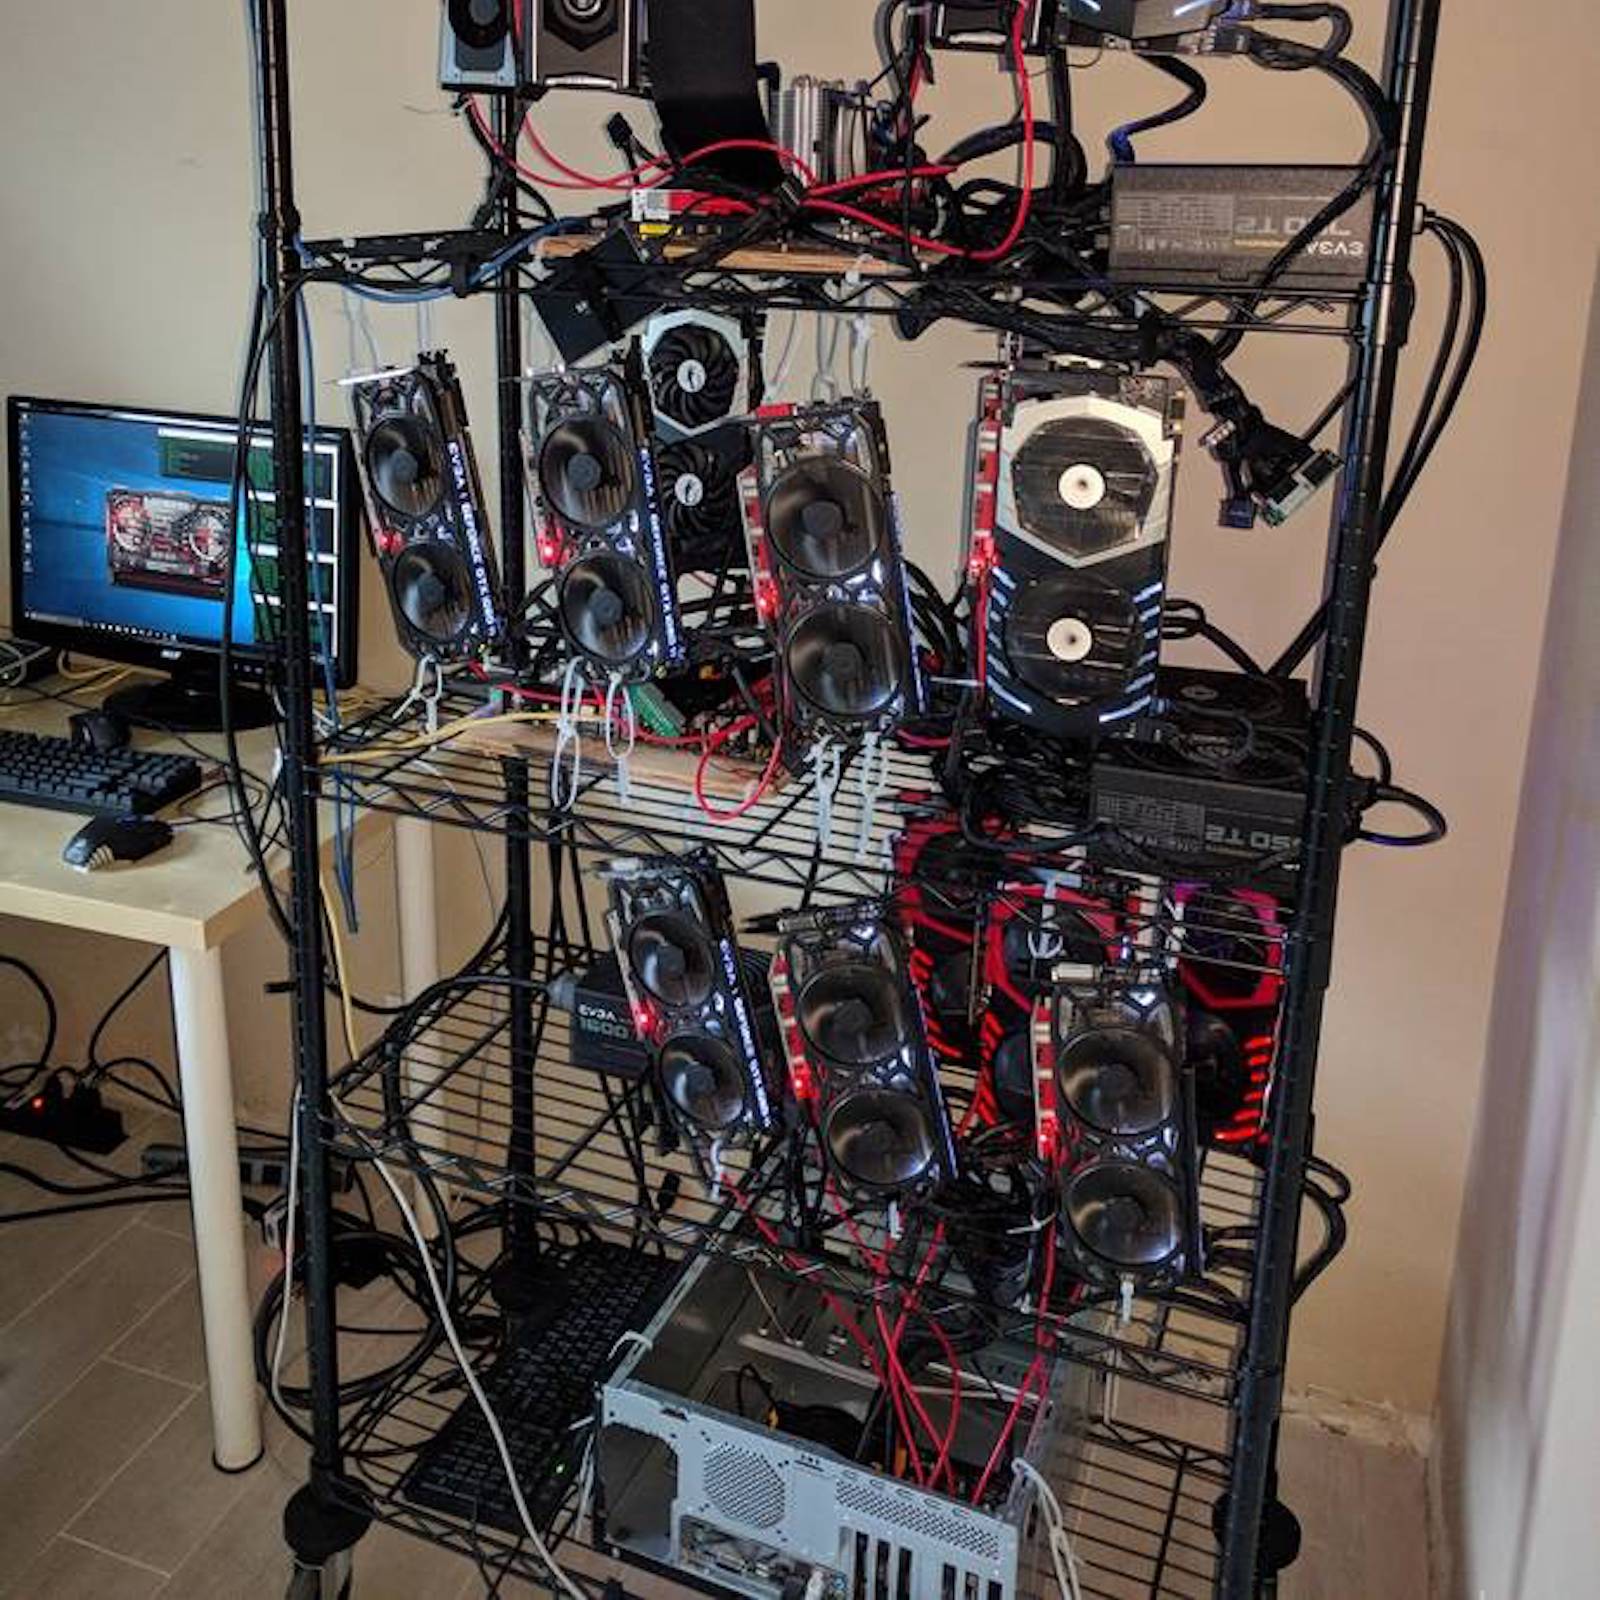 Download Bitcoin Mining Pc Setup Pics